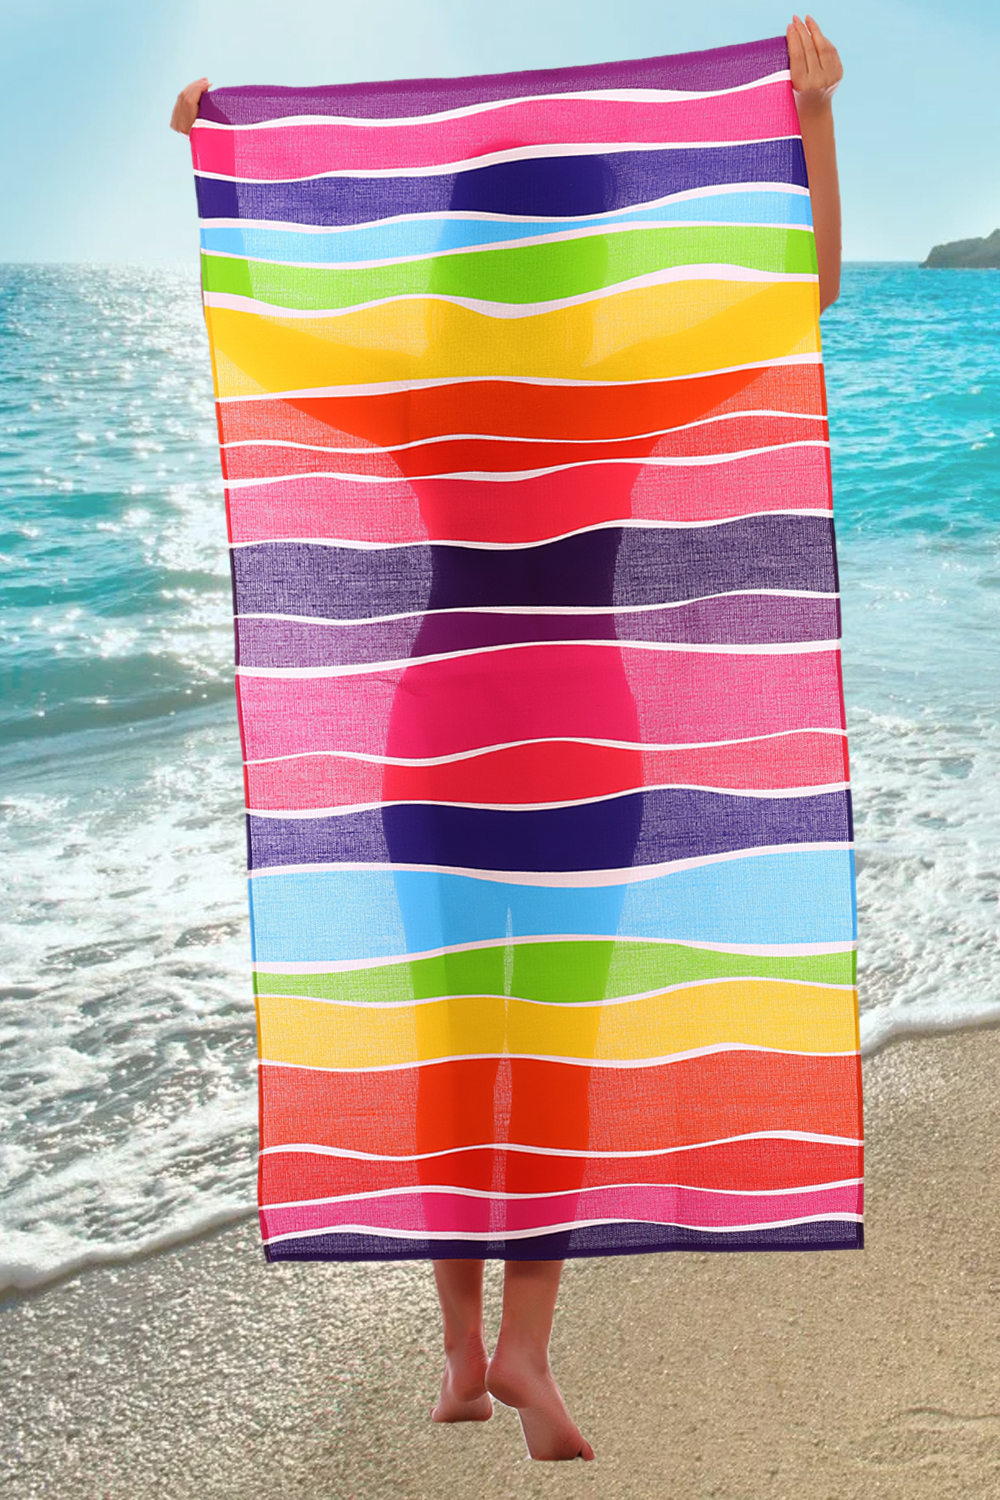 Полотенца краснодар. Пляжное полотенце. Полотенце на пляже. Полотенце вафельное пляжное. Красивые пляжные полотенца.